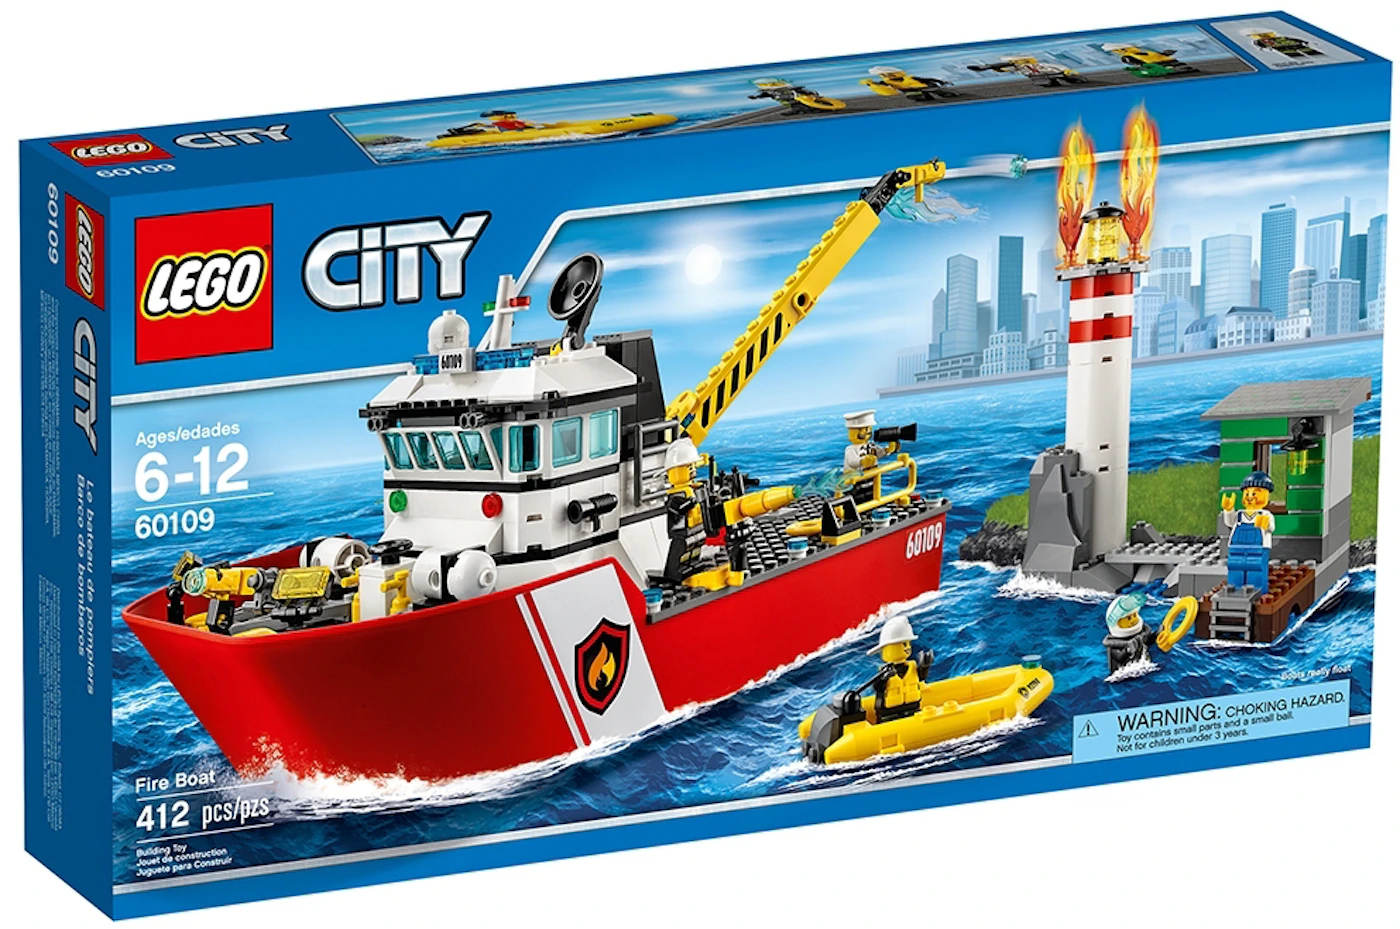 https://images.stockx.com/images/LEGO-City-Fire-Boat-Set-60109.jpg?fit=fill&bg=FFFFFF&w=700&h=500&fm=webp&auto=compress&q=90&dpr=2&trim=color&updated_at=1613679780